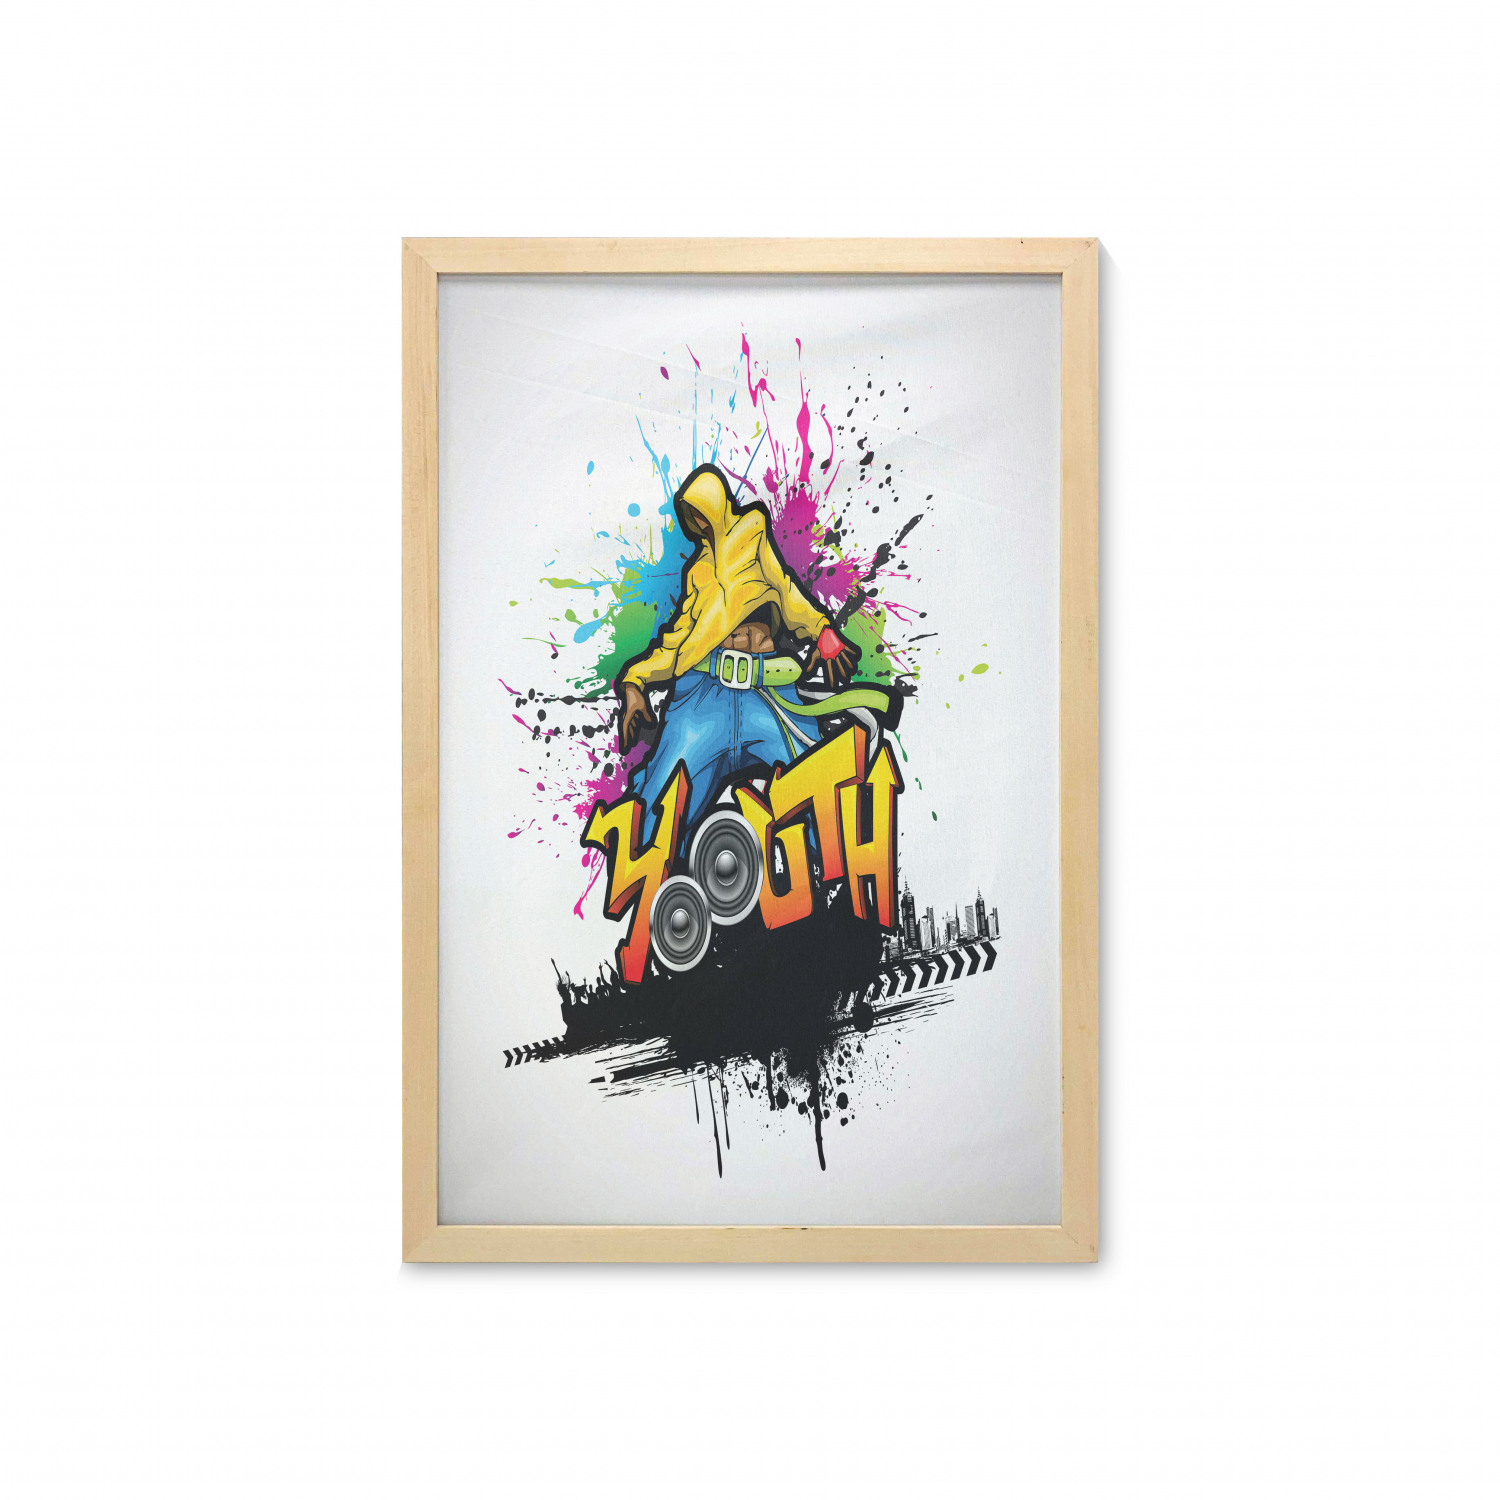 Grunge Colorful Make Up Art Print // Canvas Print Wall Art Poster Home Decor